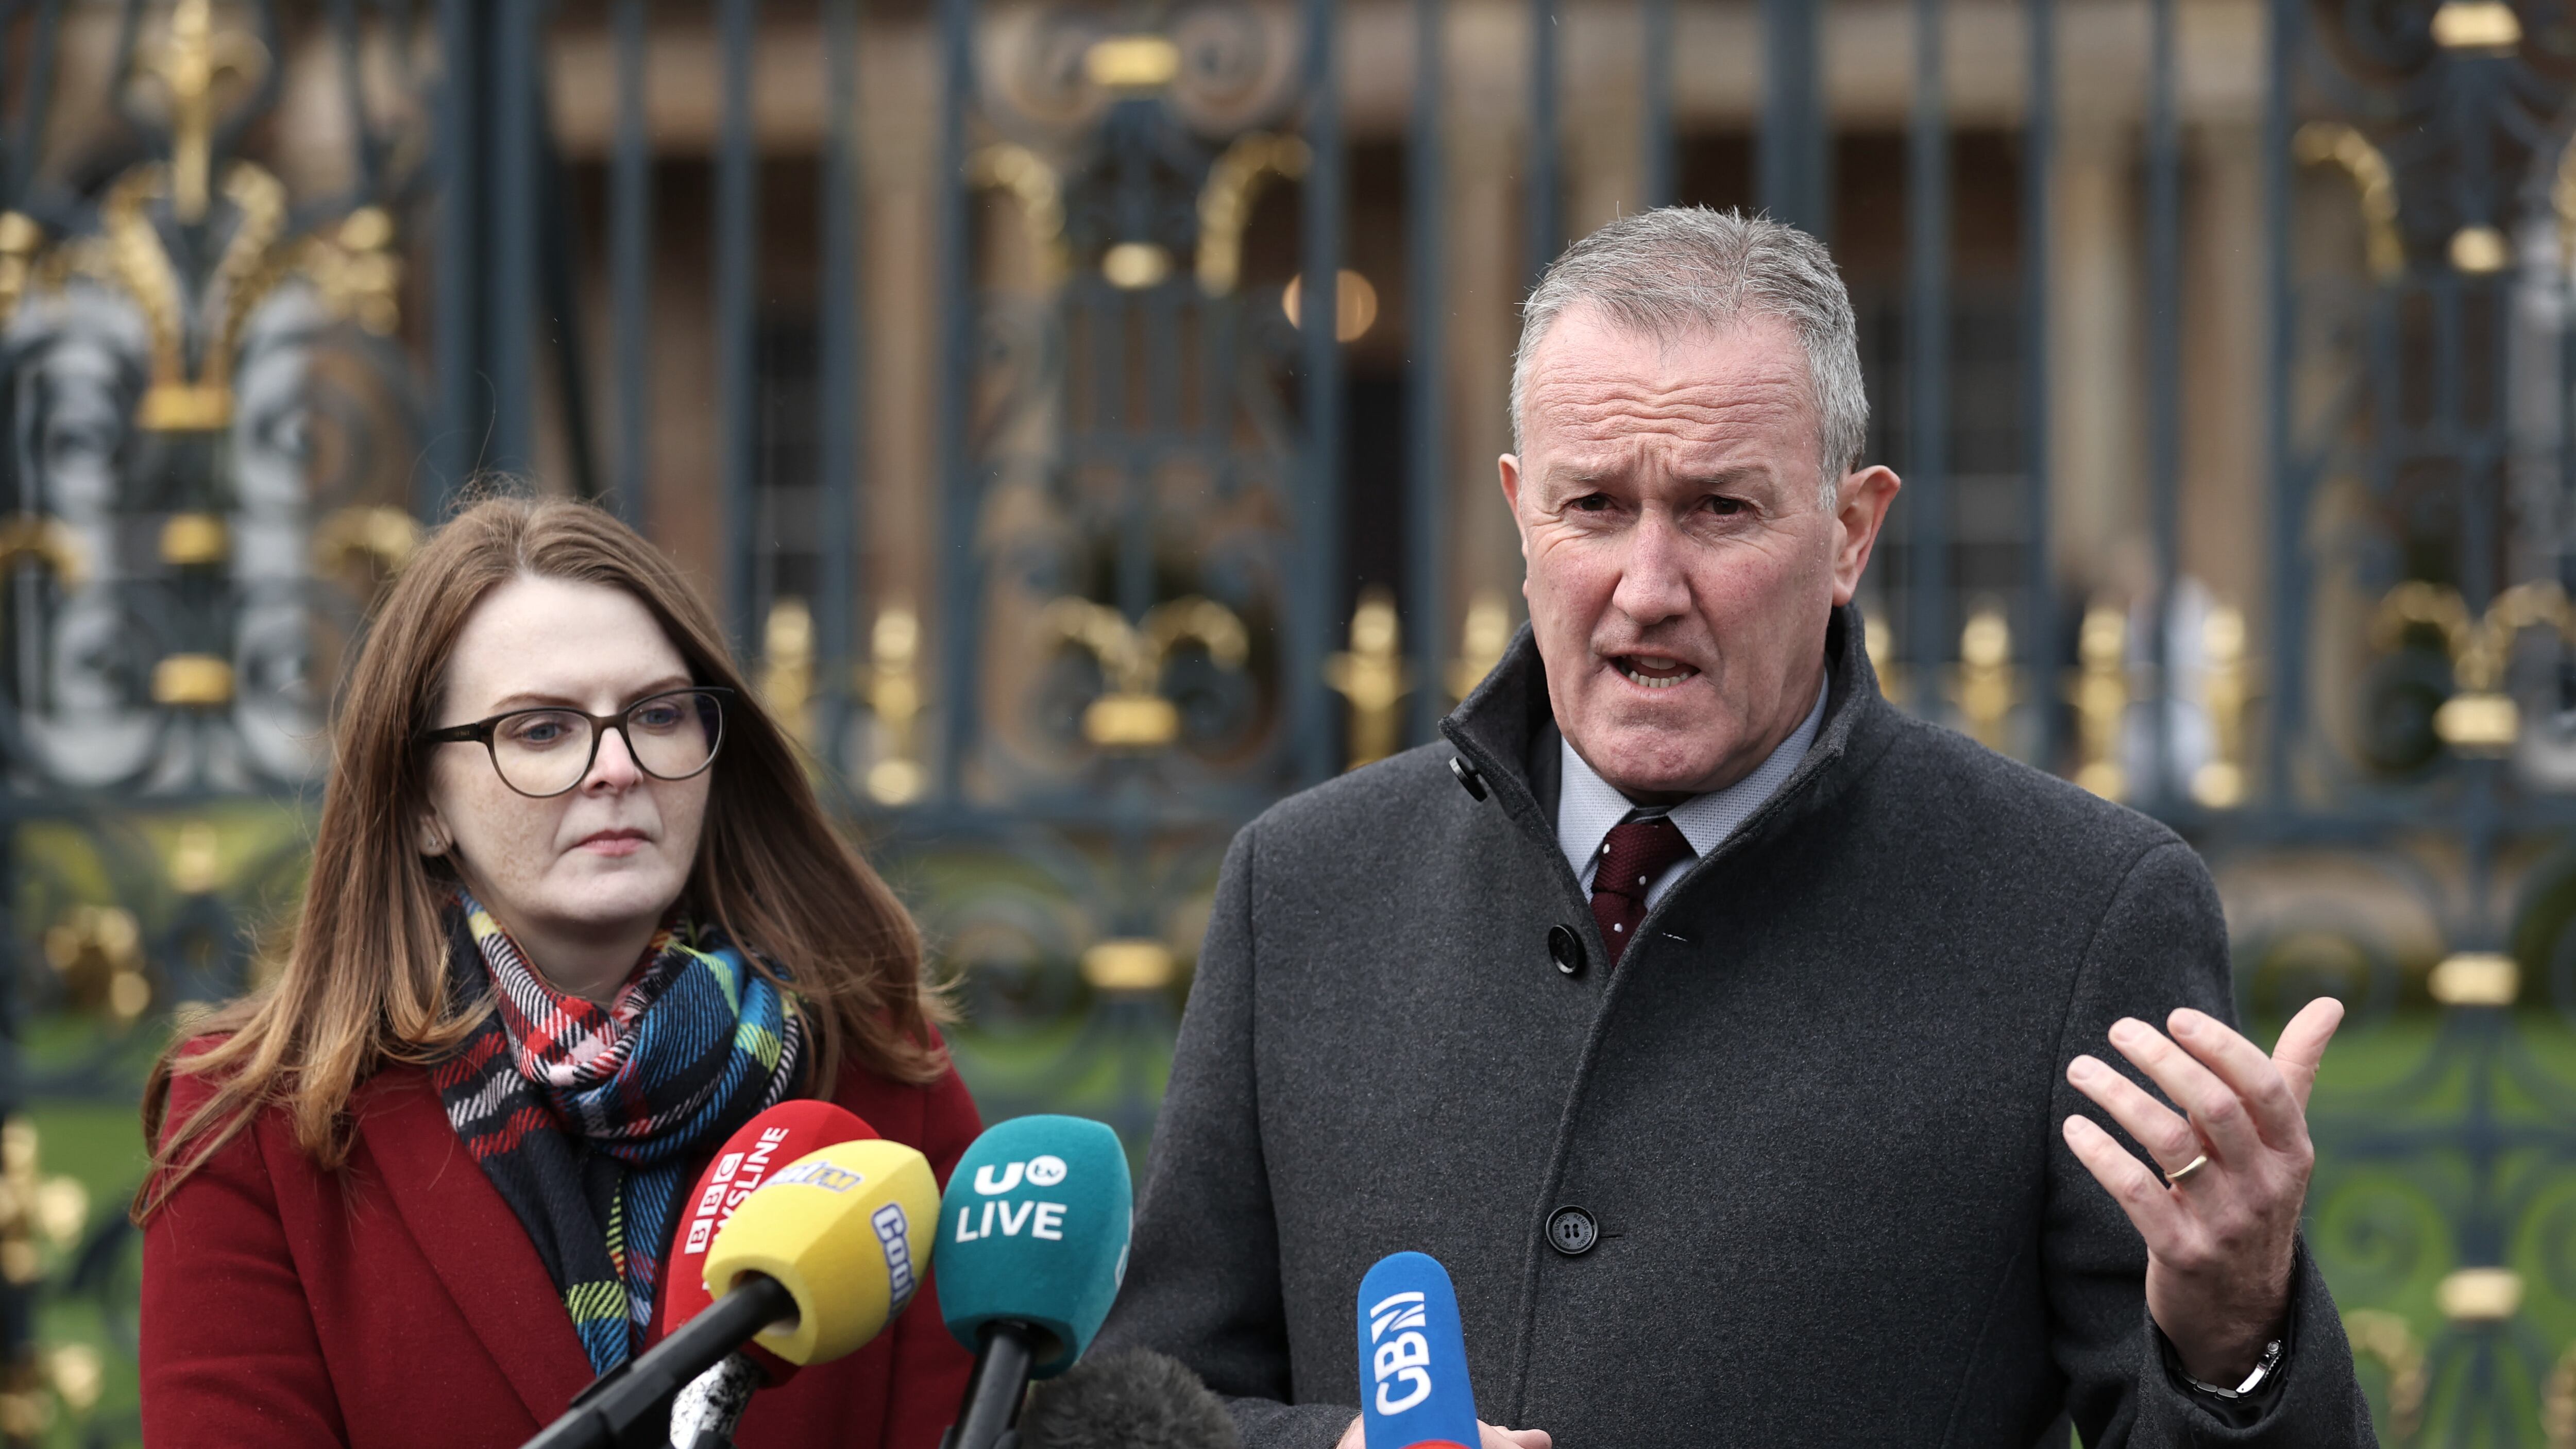 Sinn Fein MLAs Conor Murphy and Caoimhe Archibald